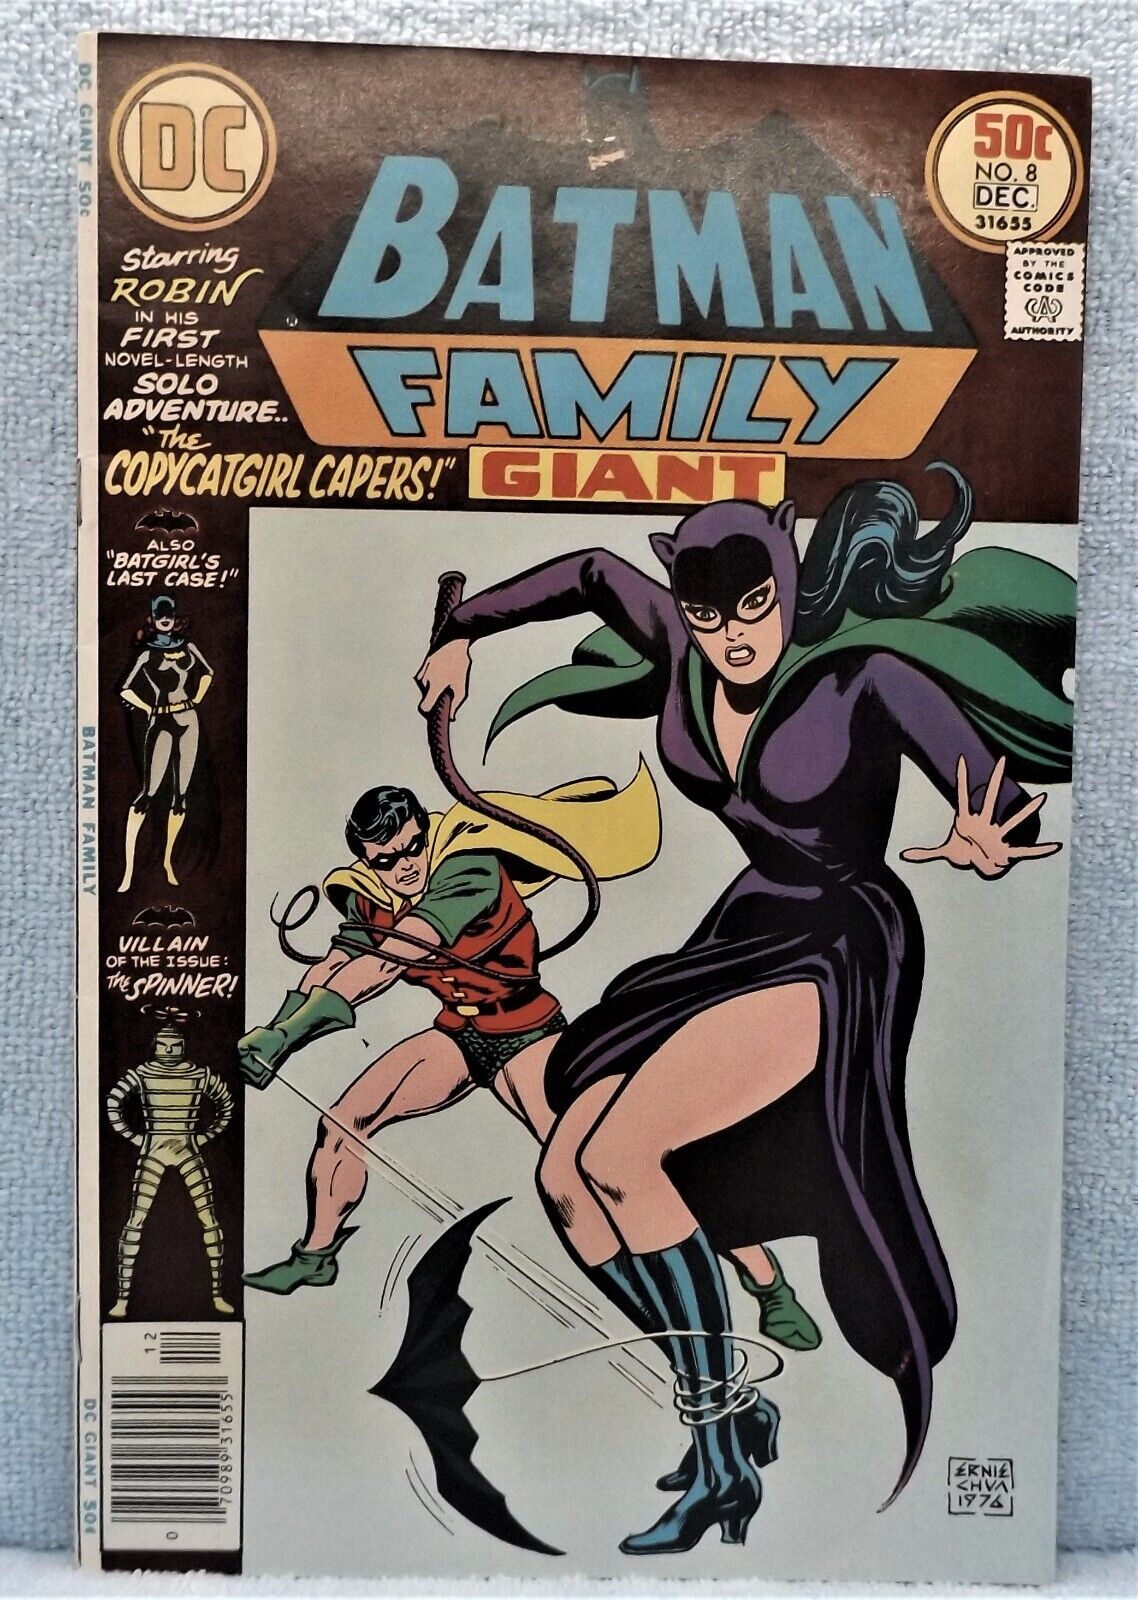 DC COMICS: BATMAN FAMILY GIANT #8 (1976) VG+/F \